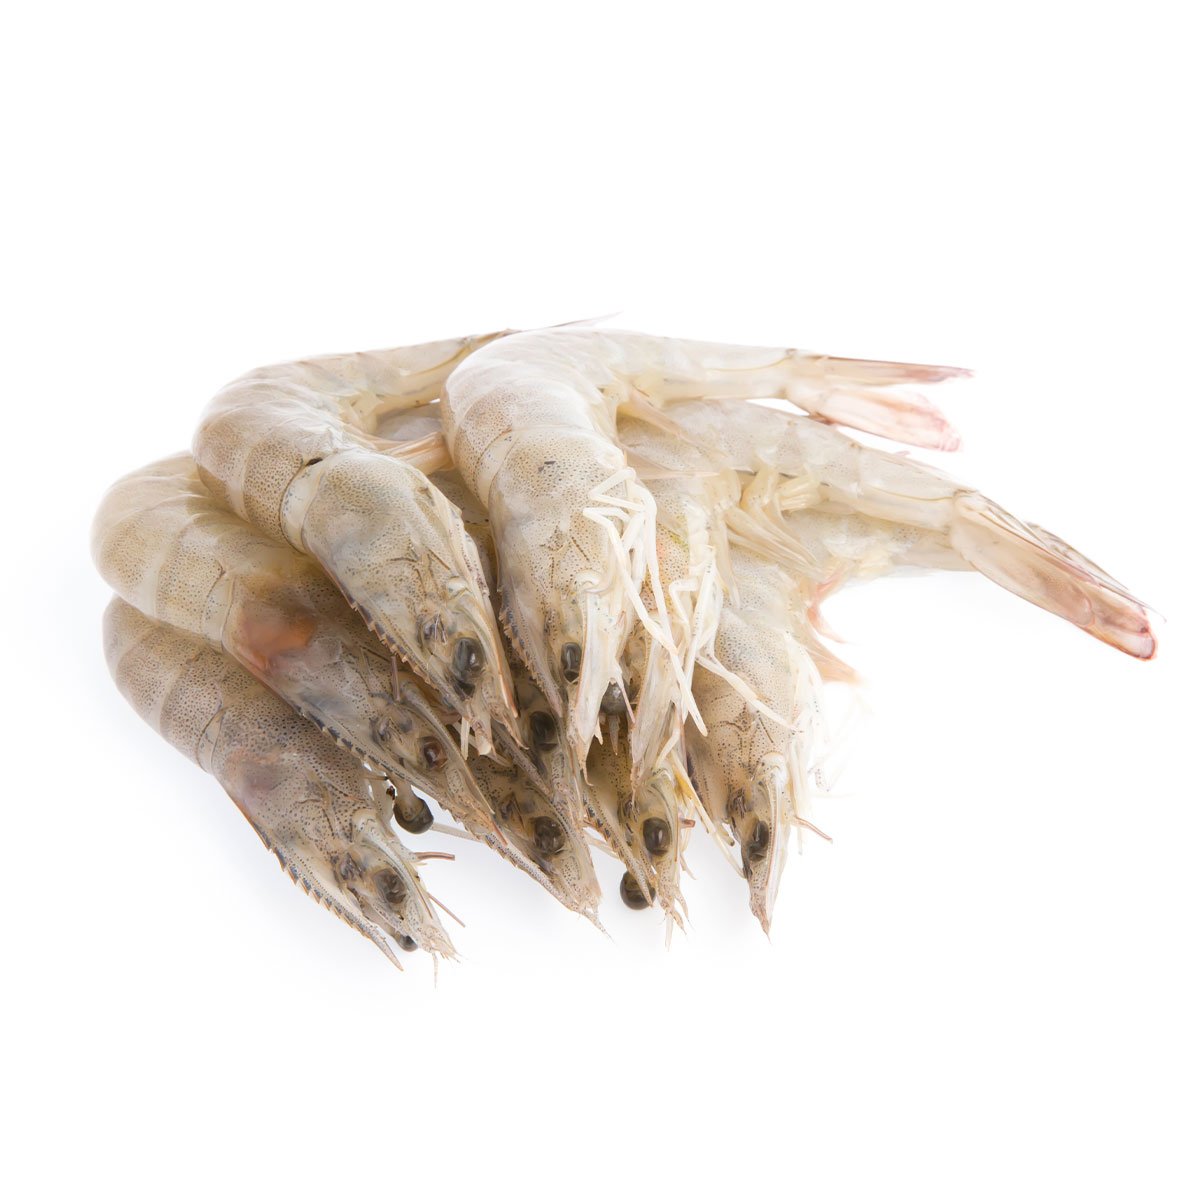 Fresh White Shrimp With Head